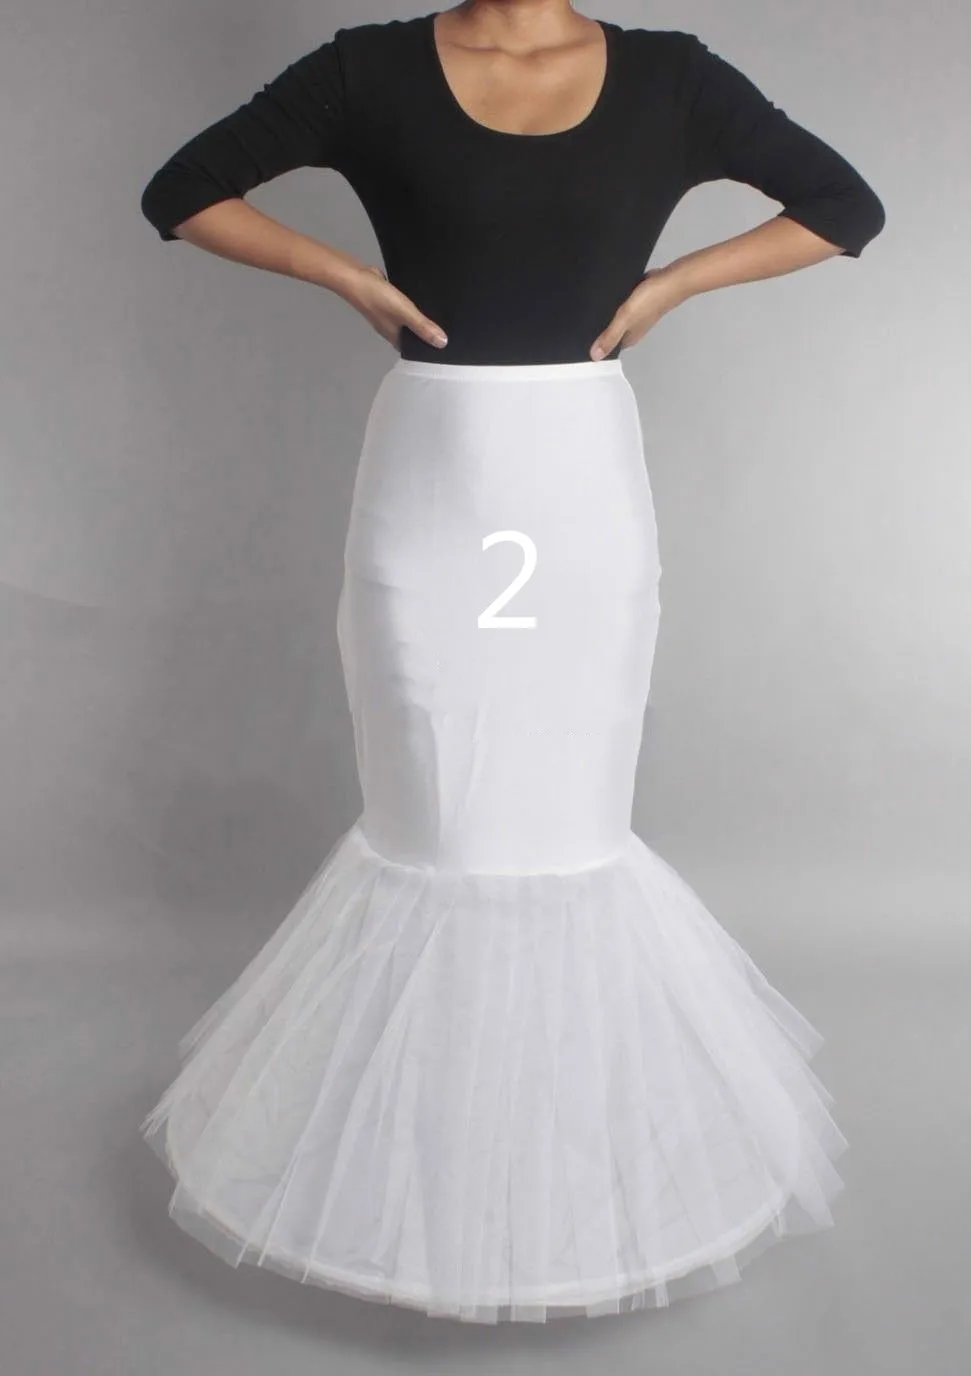 Eternally Elegant Sell Many Styles Bridal Wedding Petticoat Hoop Crinoline Prom Underskirt Fancy Skirt Slip -Outlet Maid Outfit Store